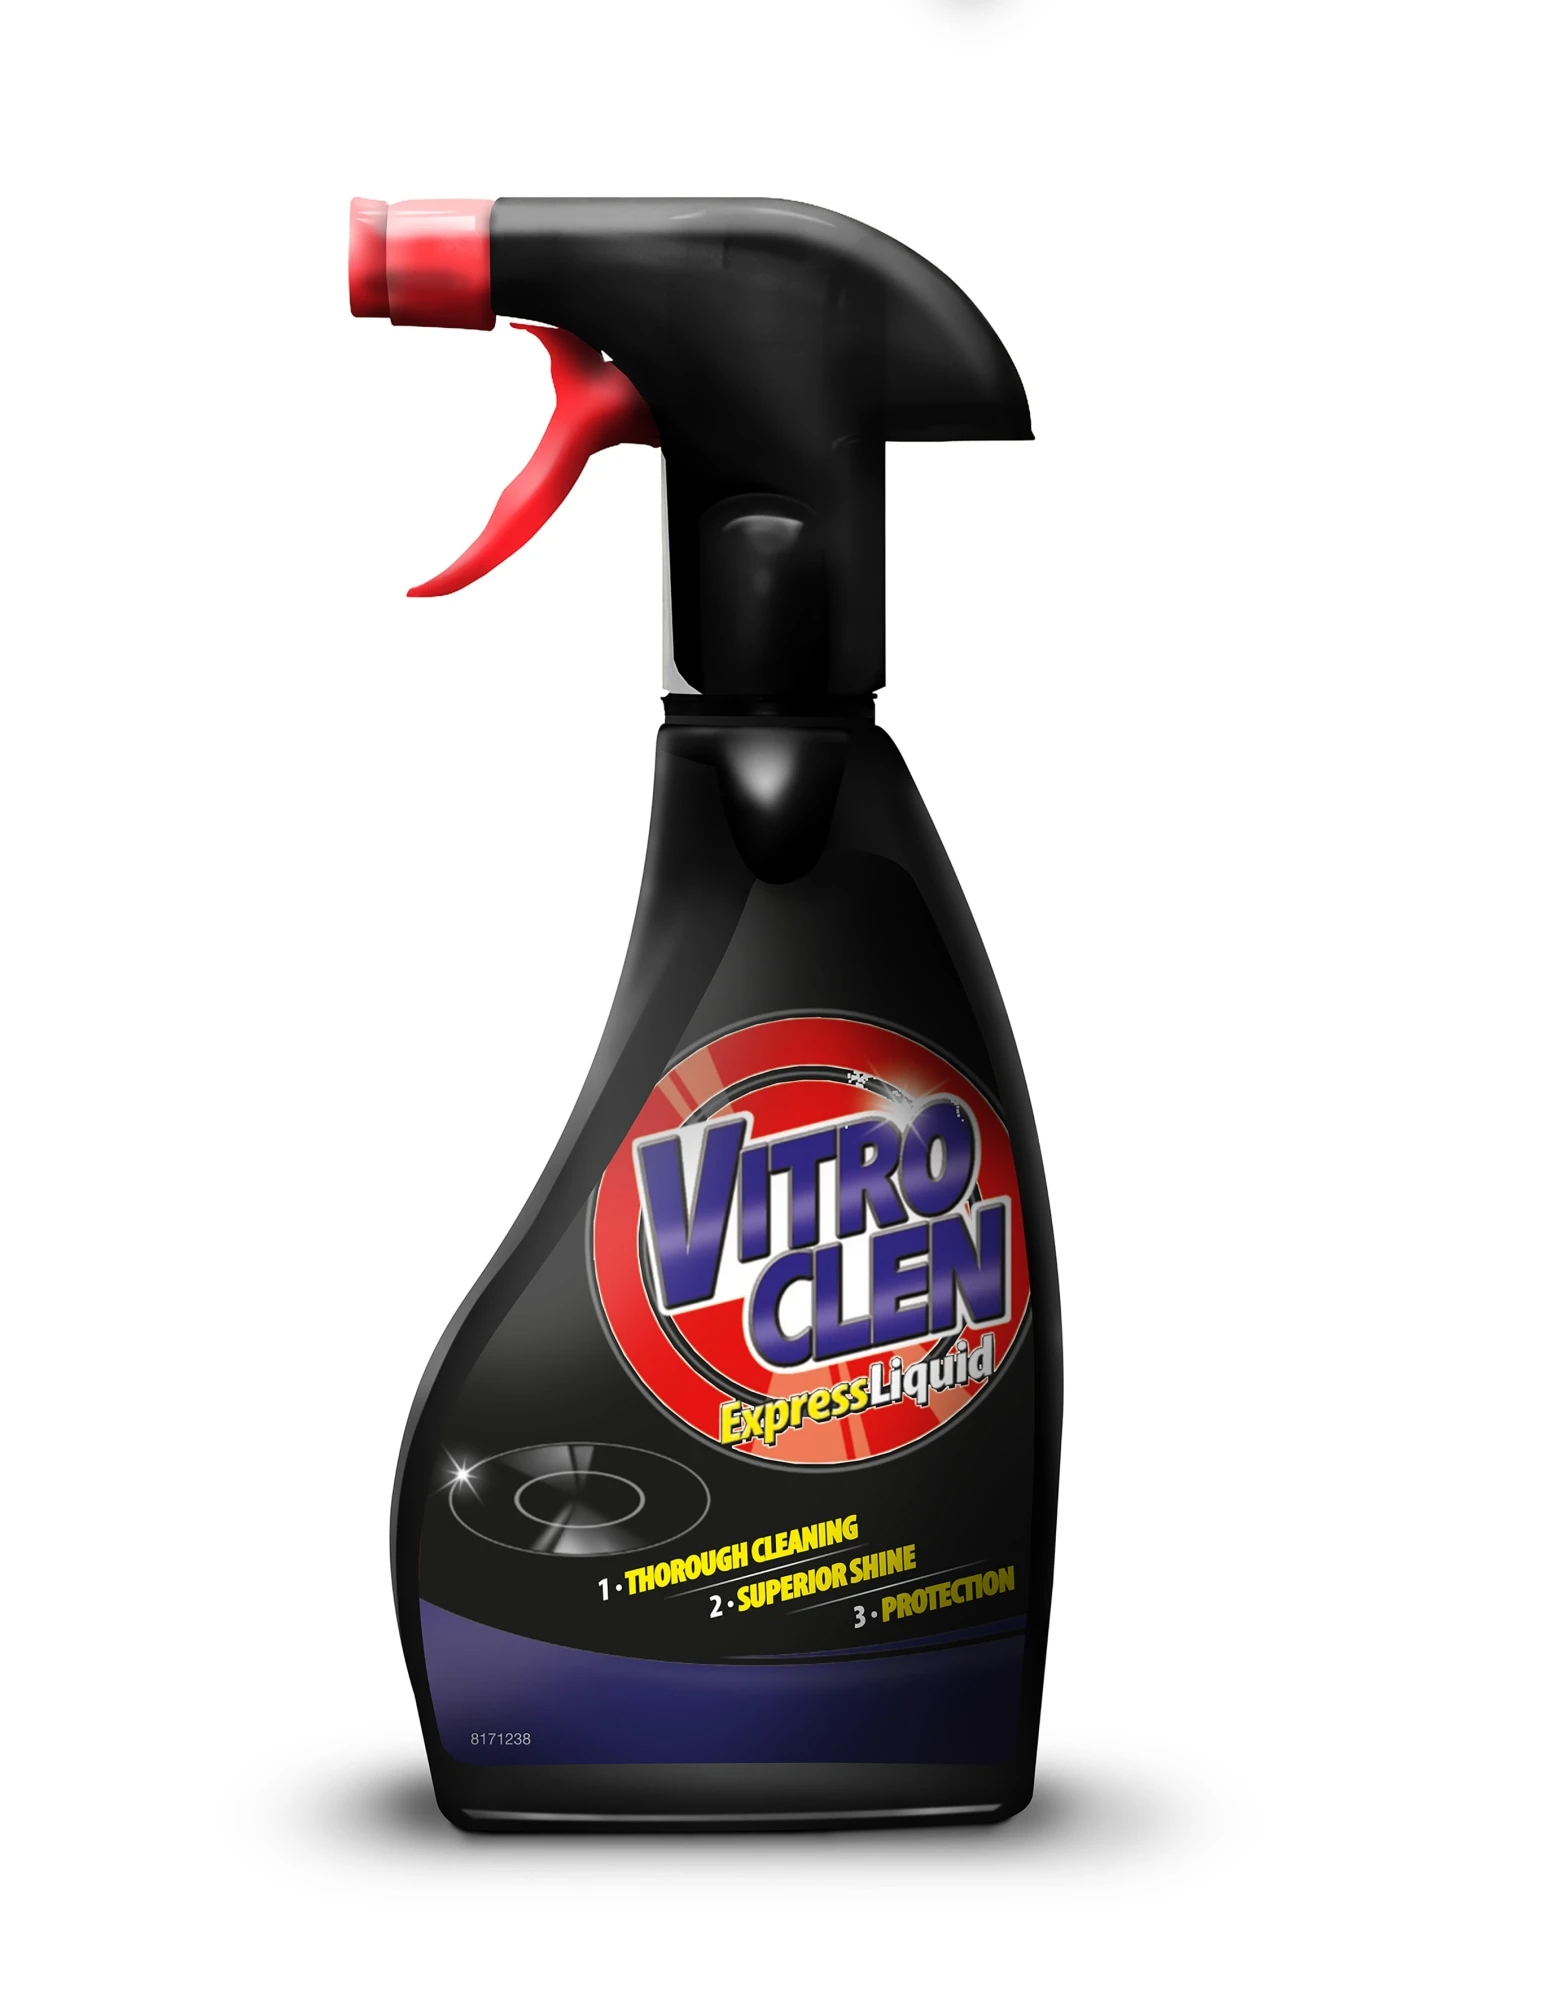 Vitro Clen cleaning spray bottle 250ml